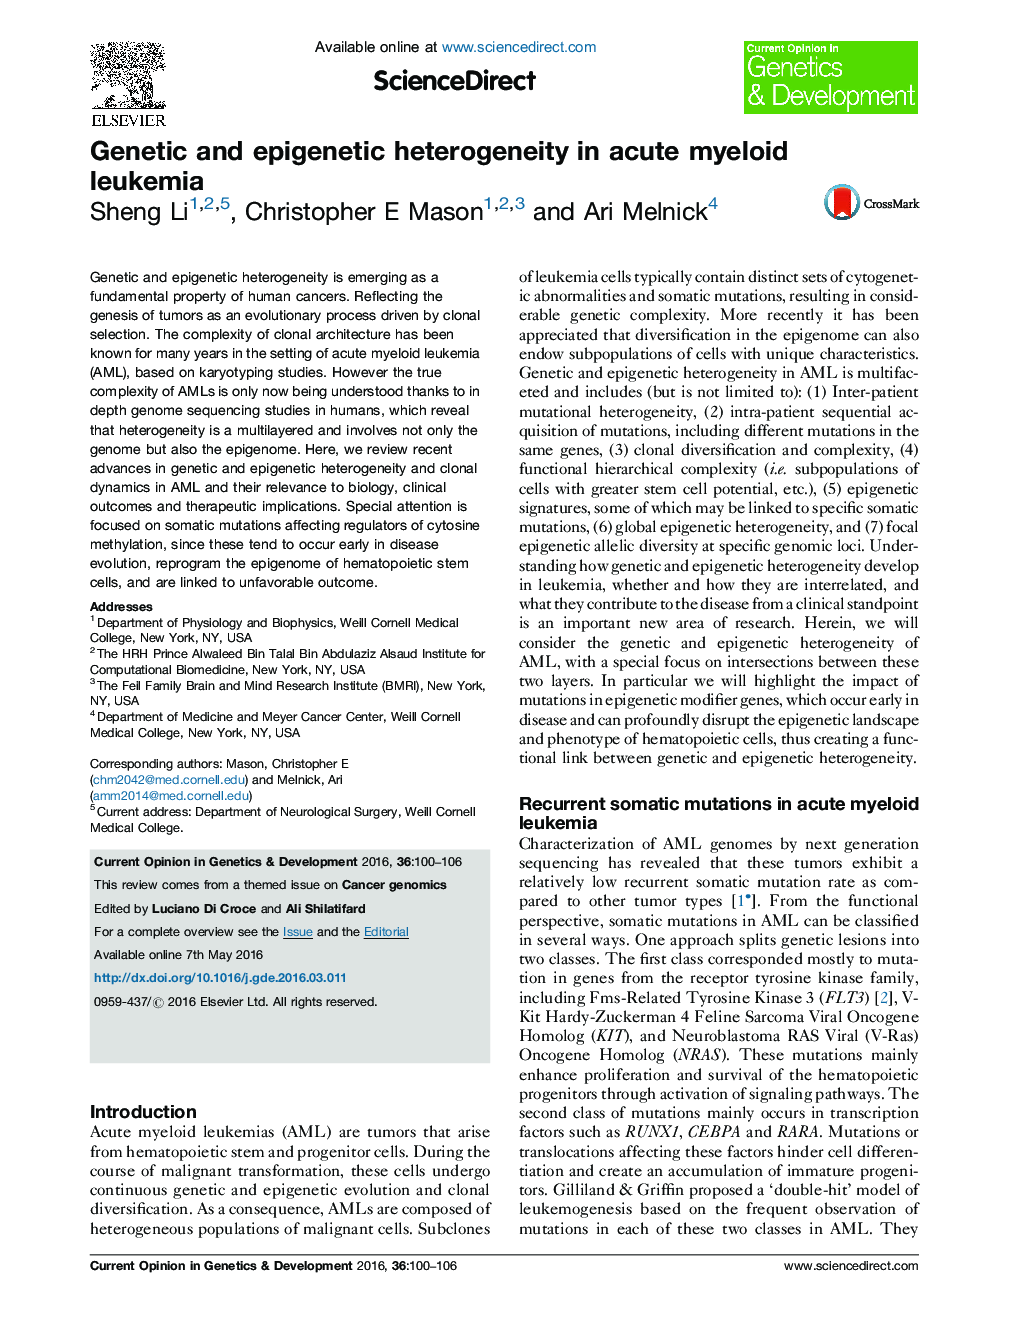 Genetic and epigenetic heterogeneity in acute myeloid leukemia